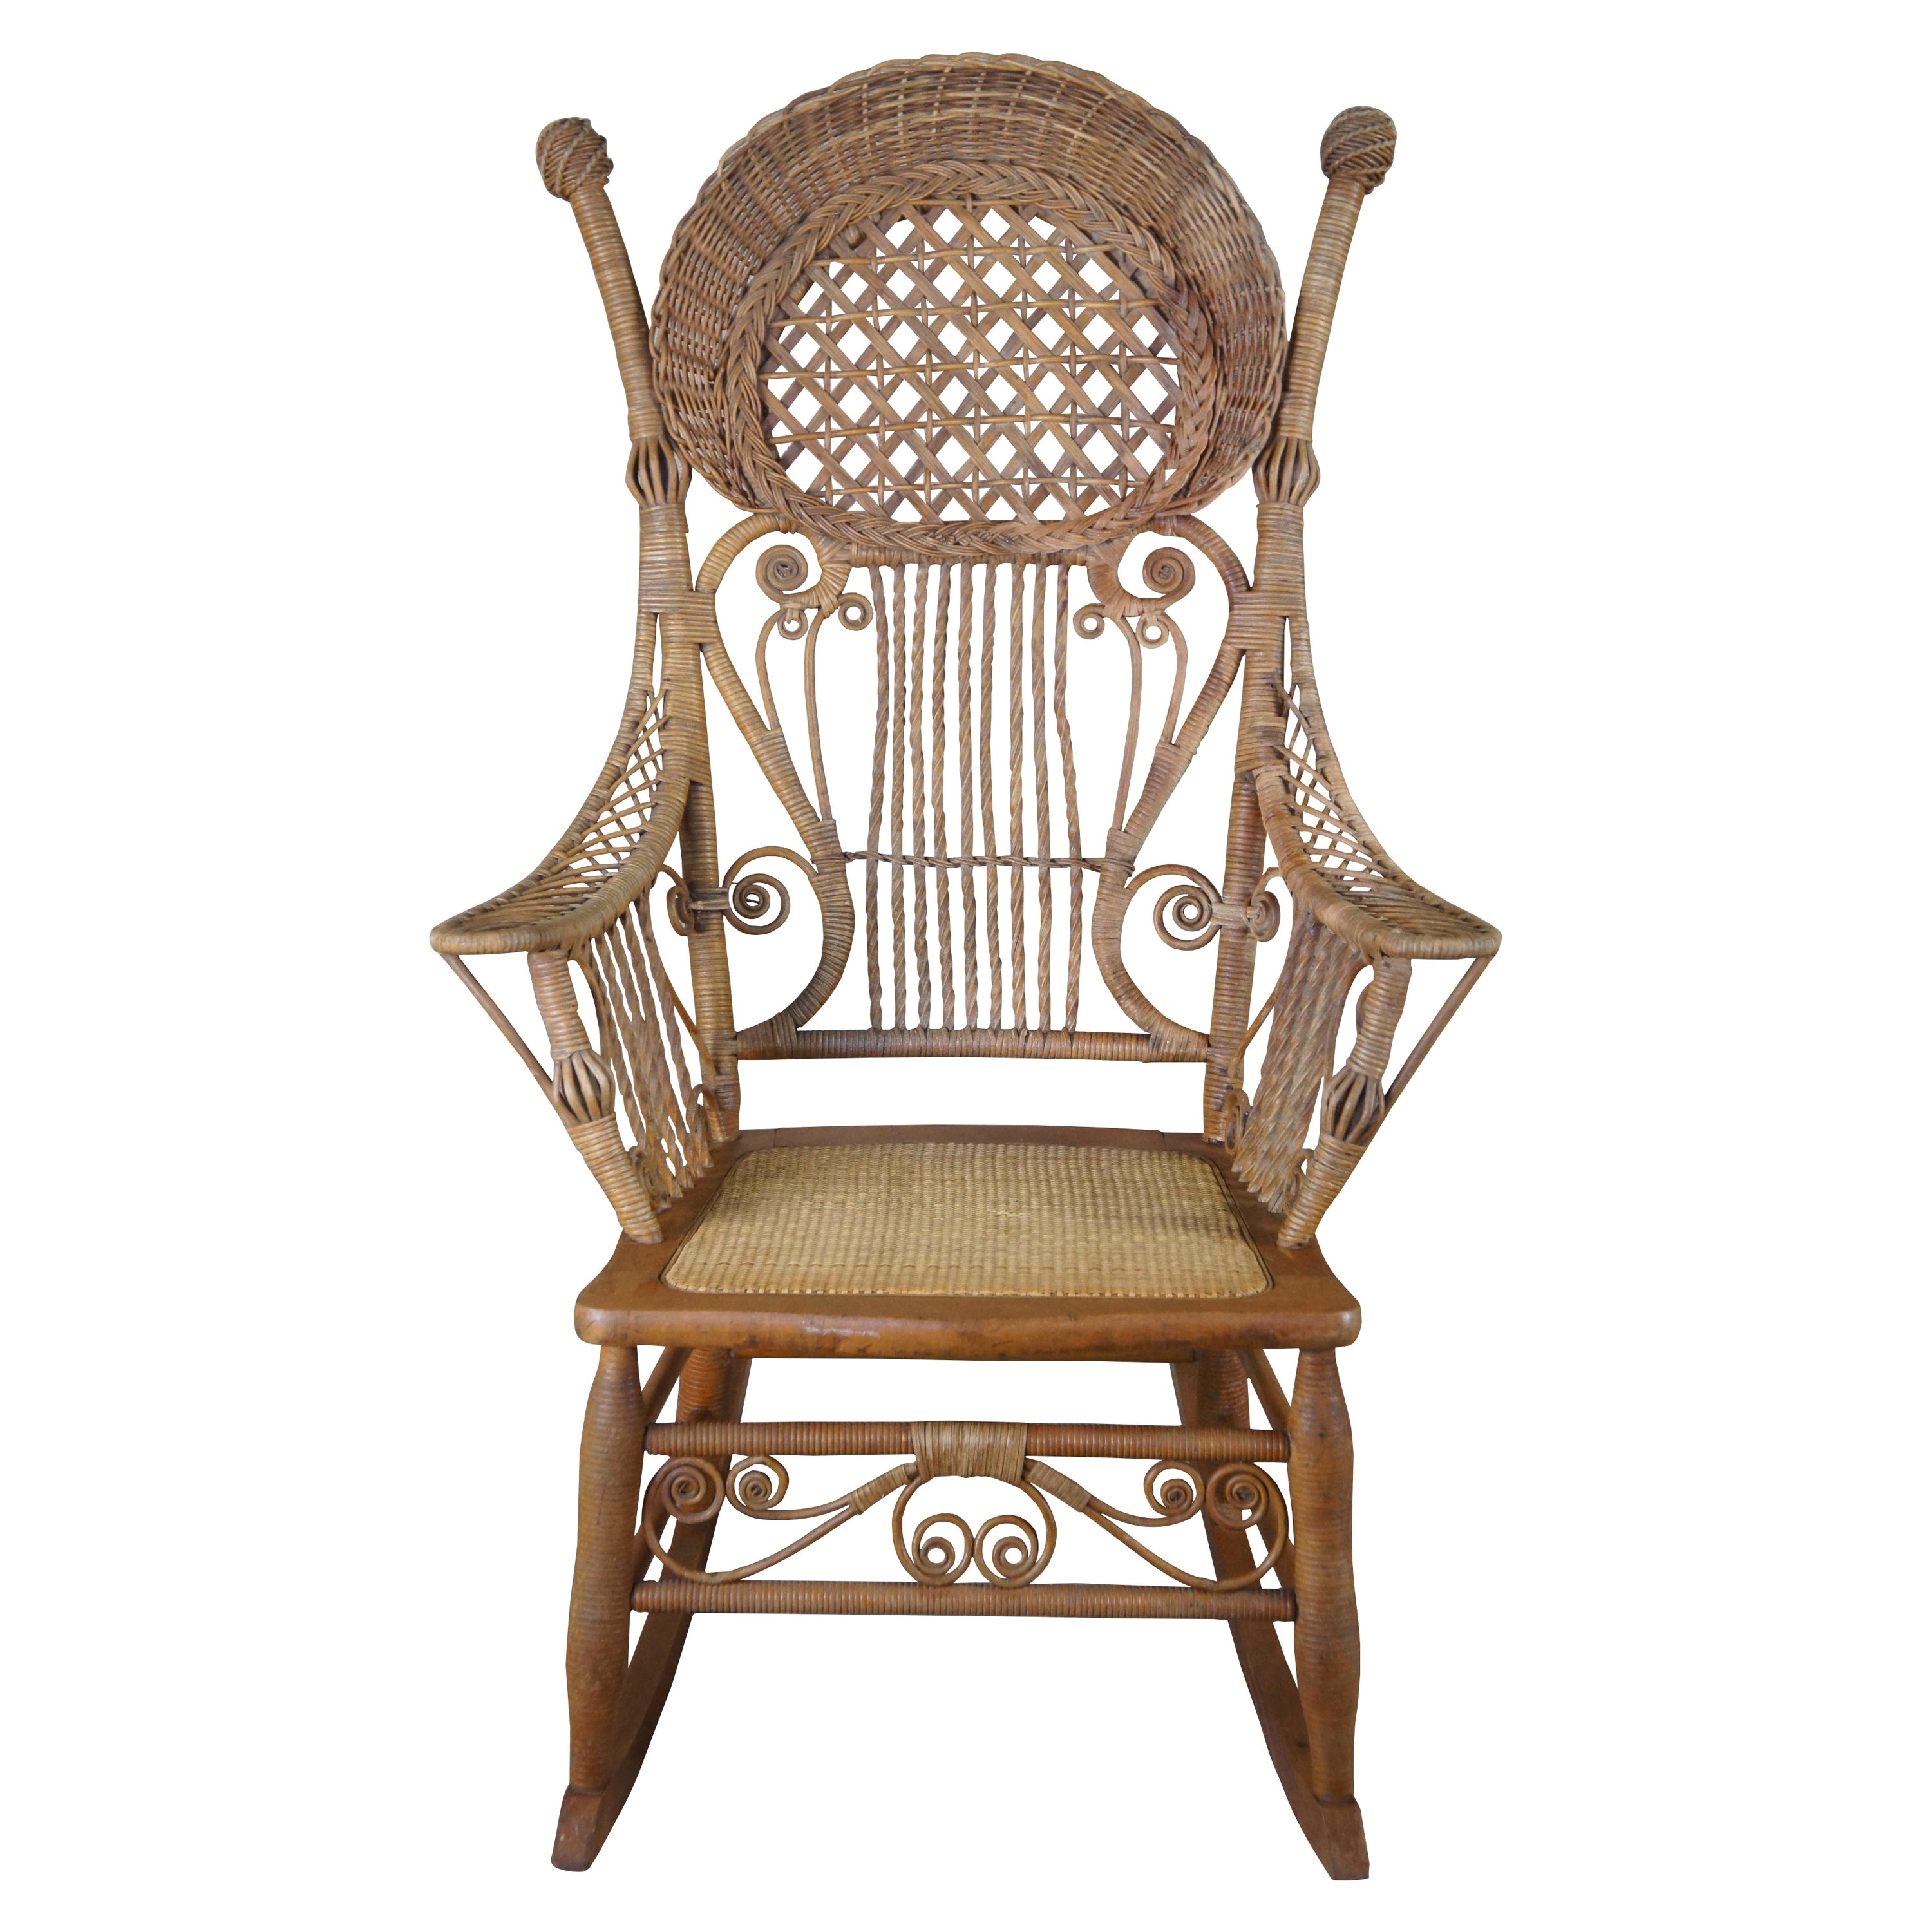 Antique Heywood Wakefield Victorian Wicker Rocking Arm Chair Rattan Seat 1900s